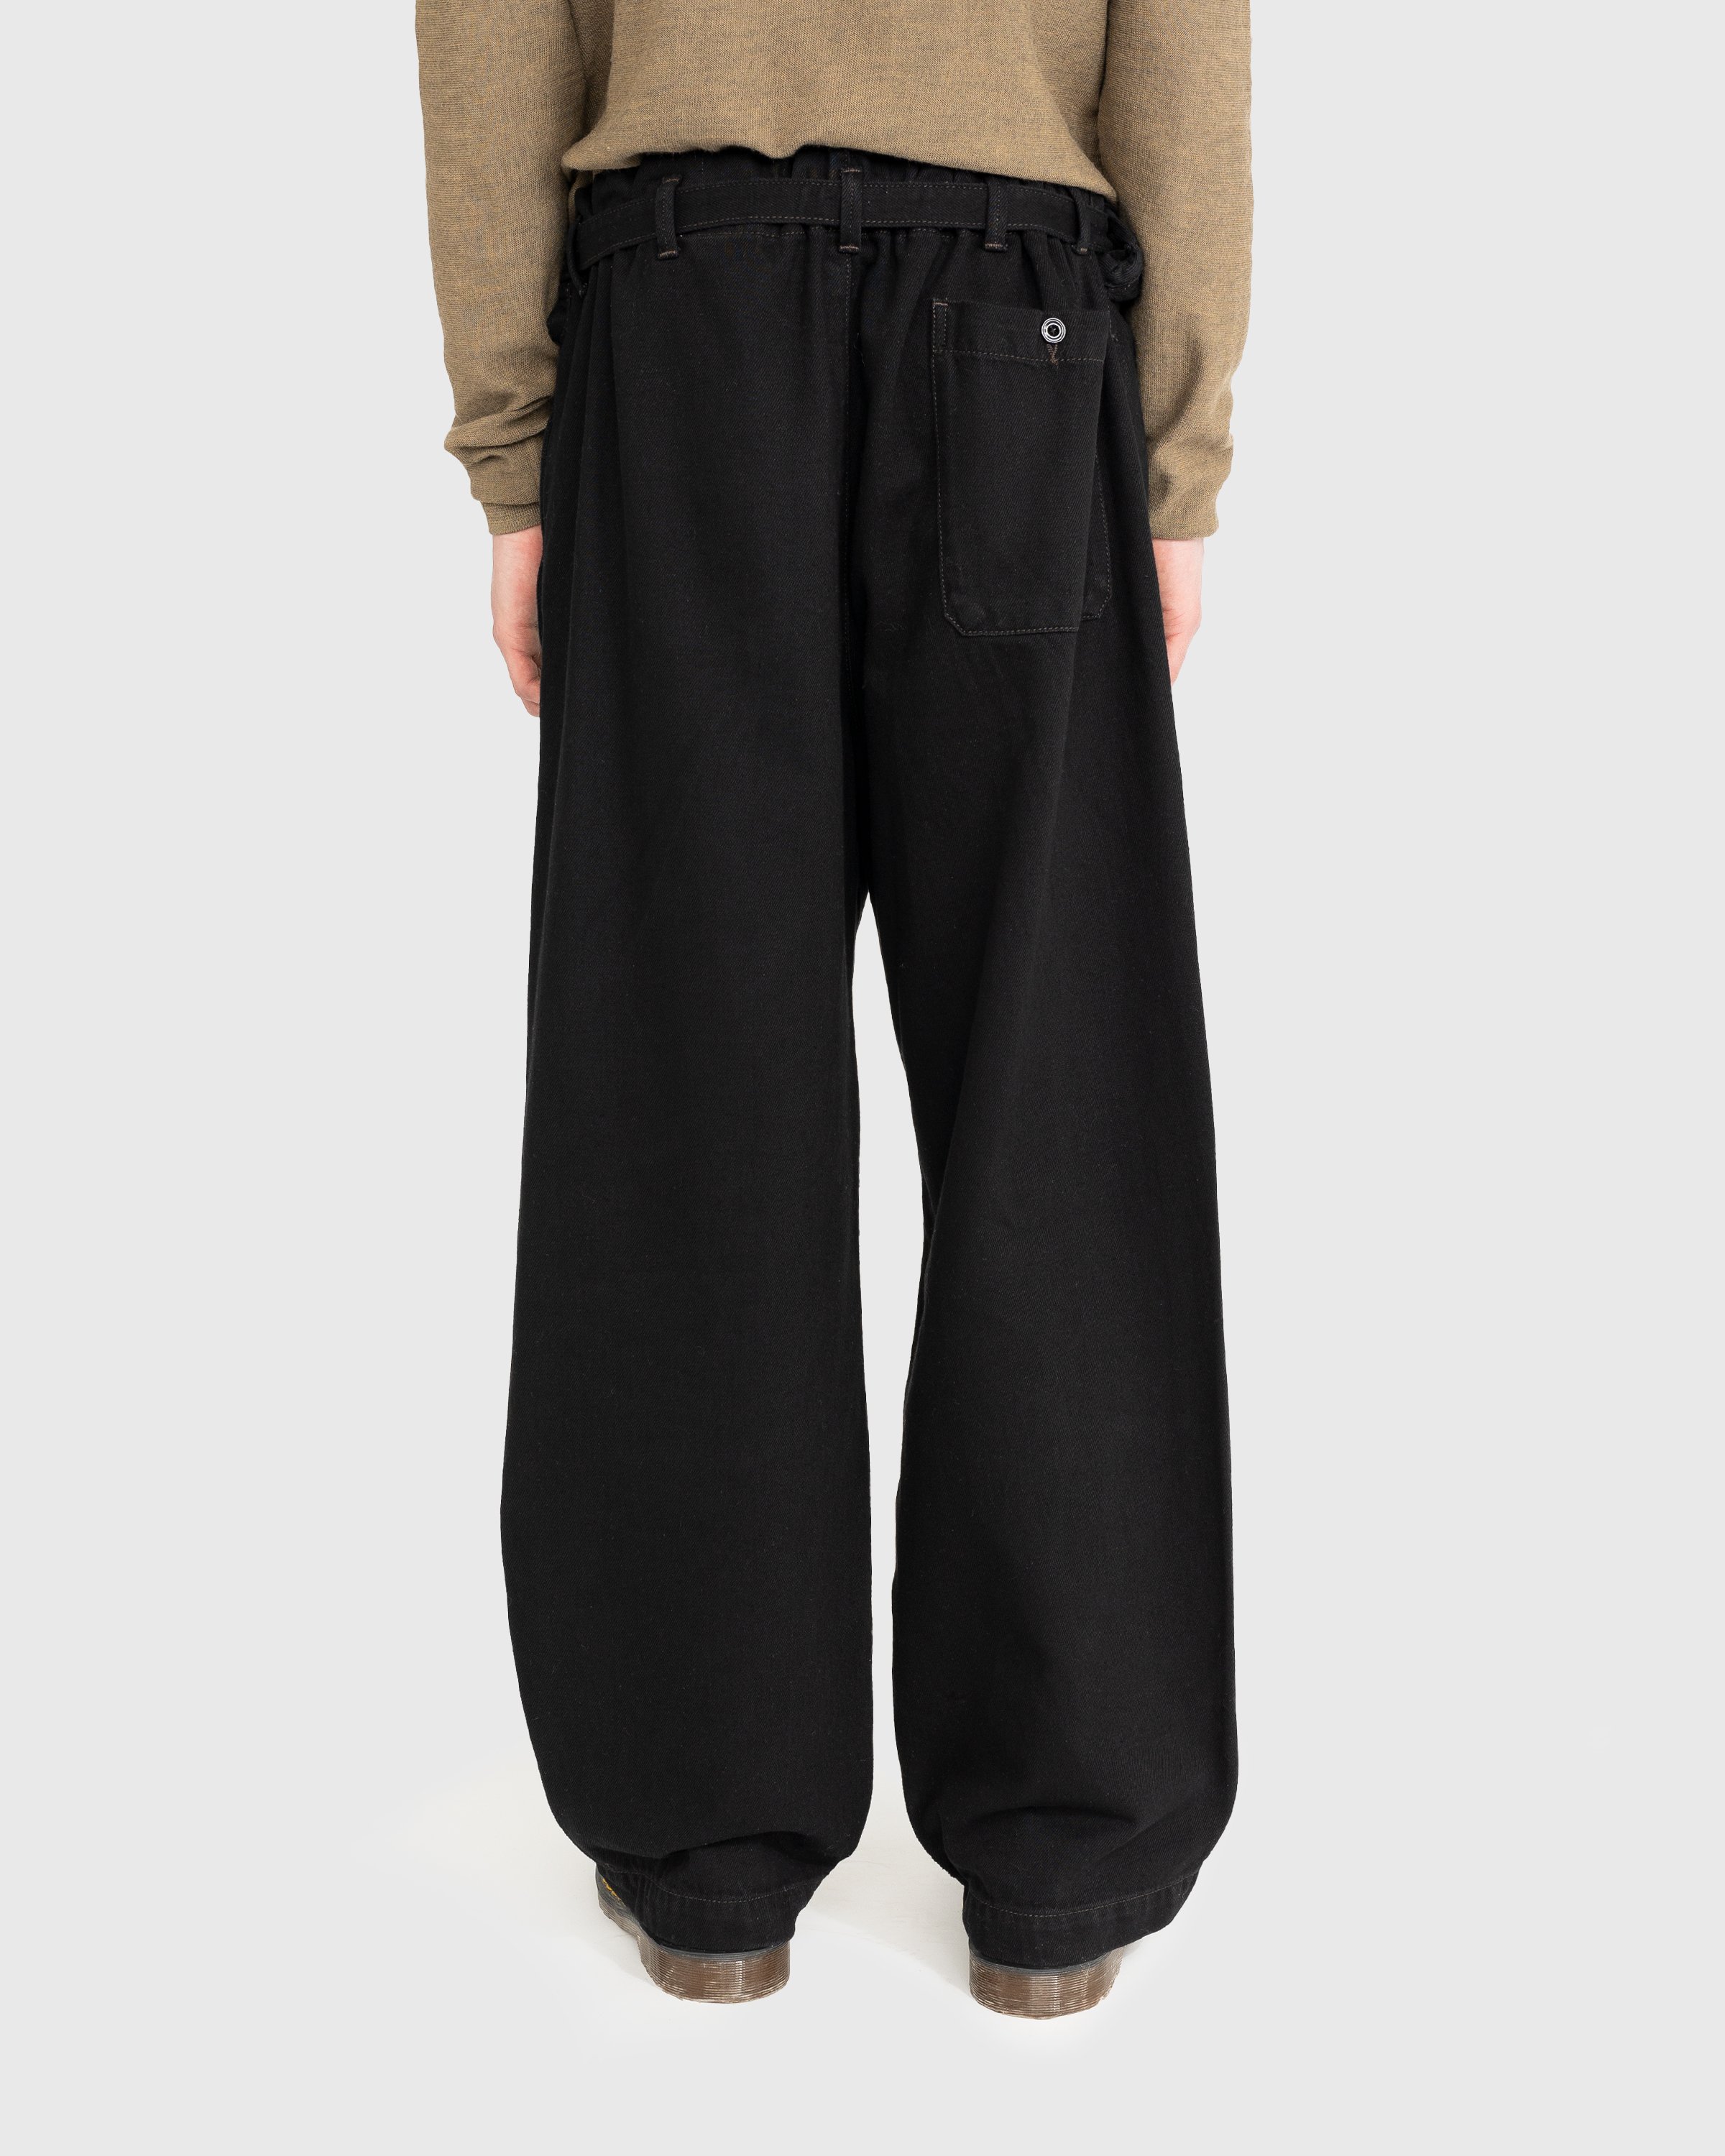 Lemaire - Judo Pants - Clothing - Black - Image 3